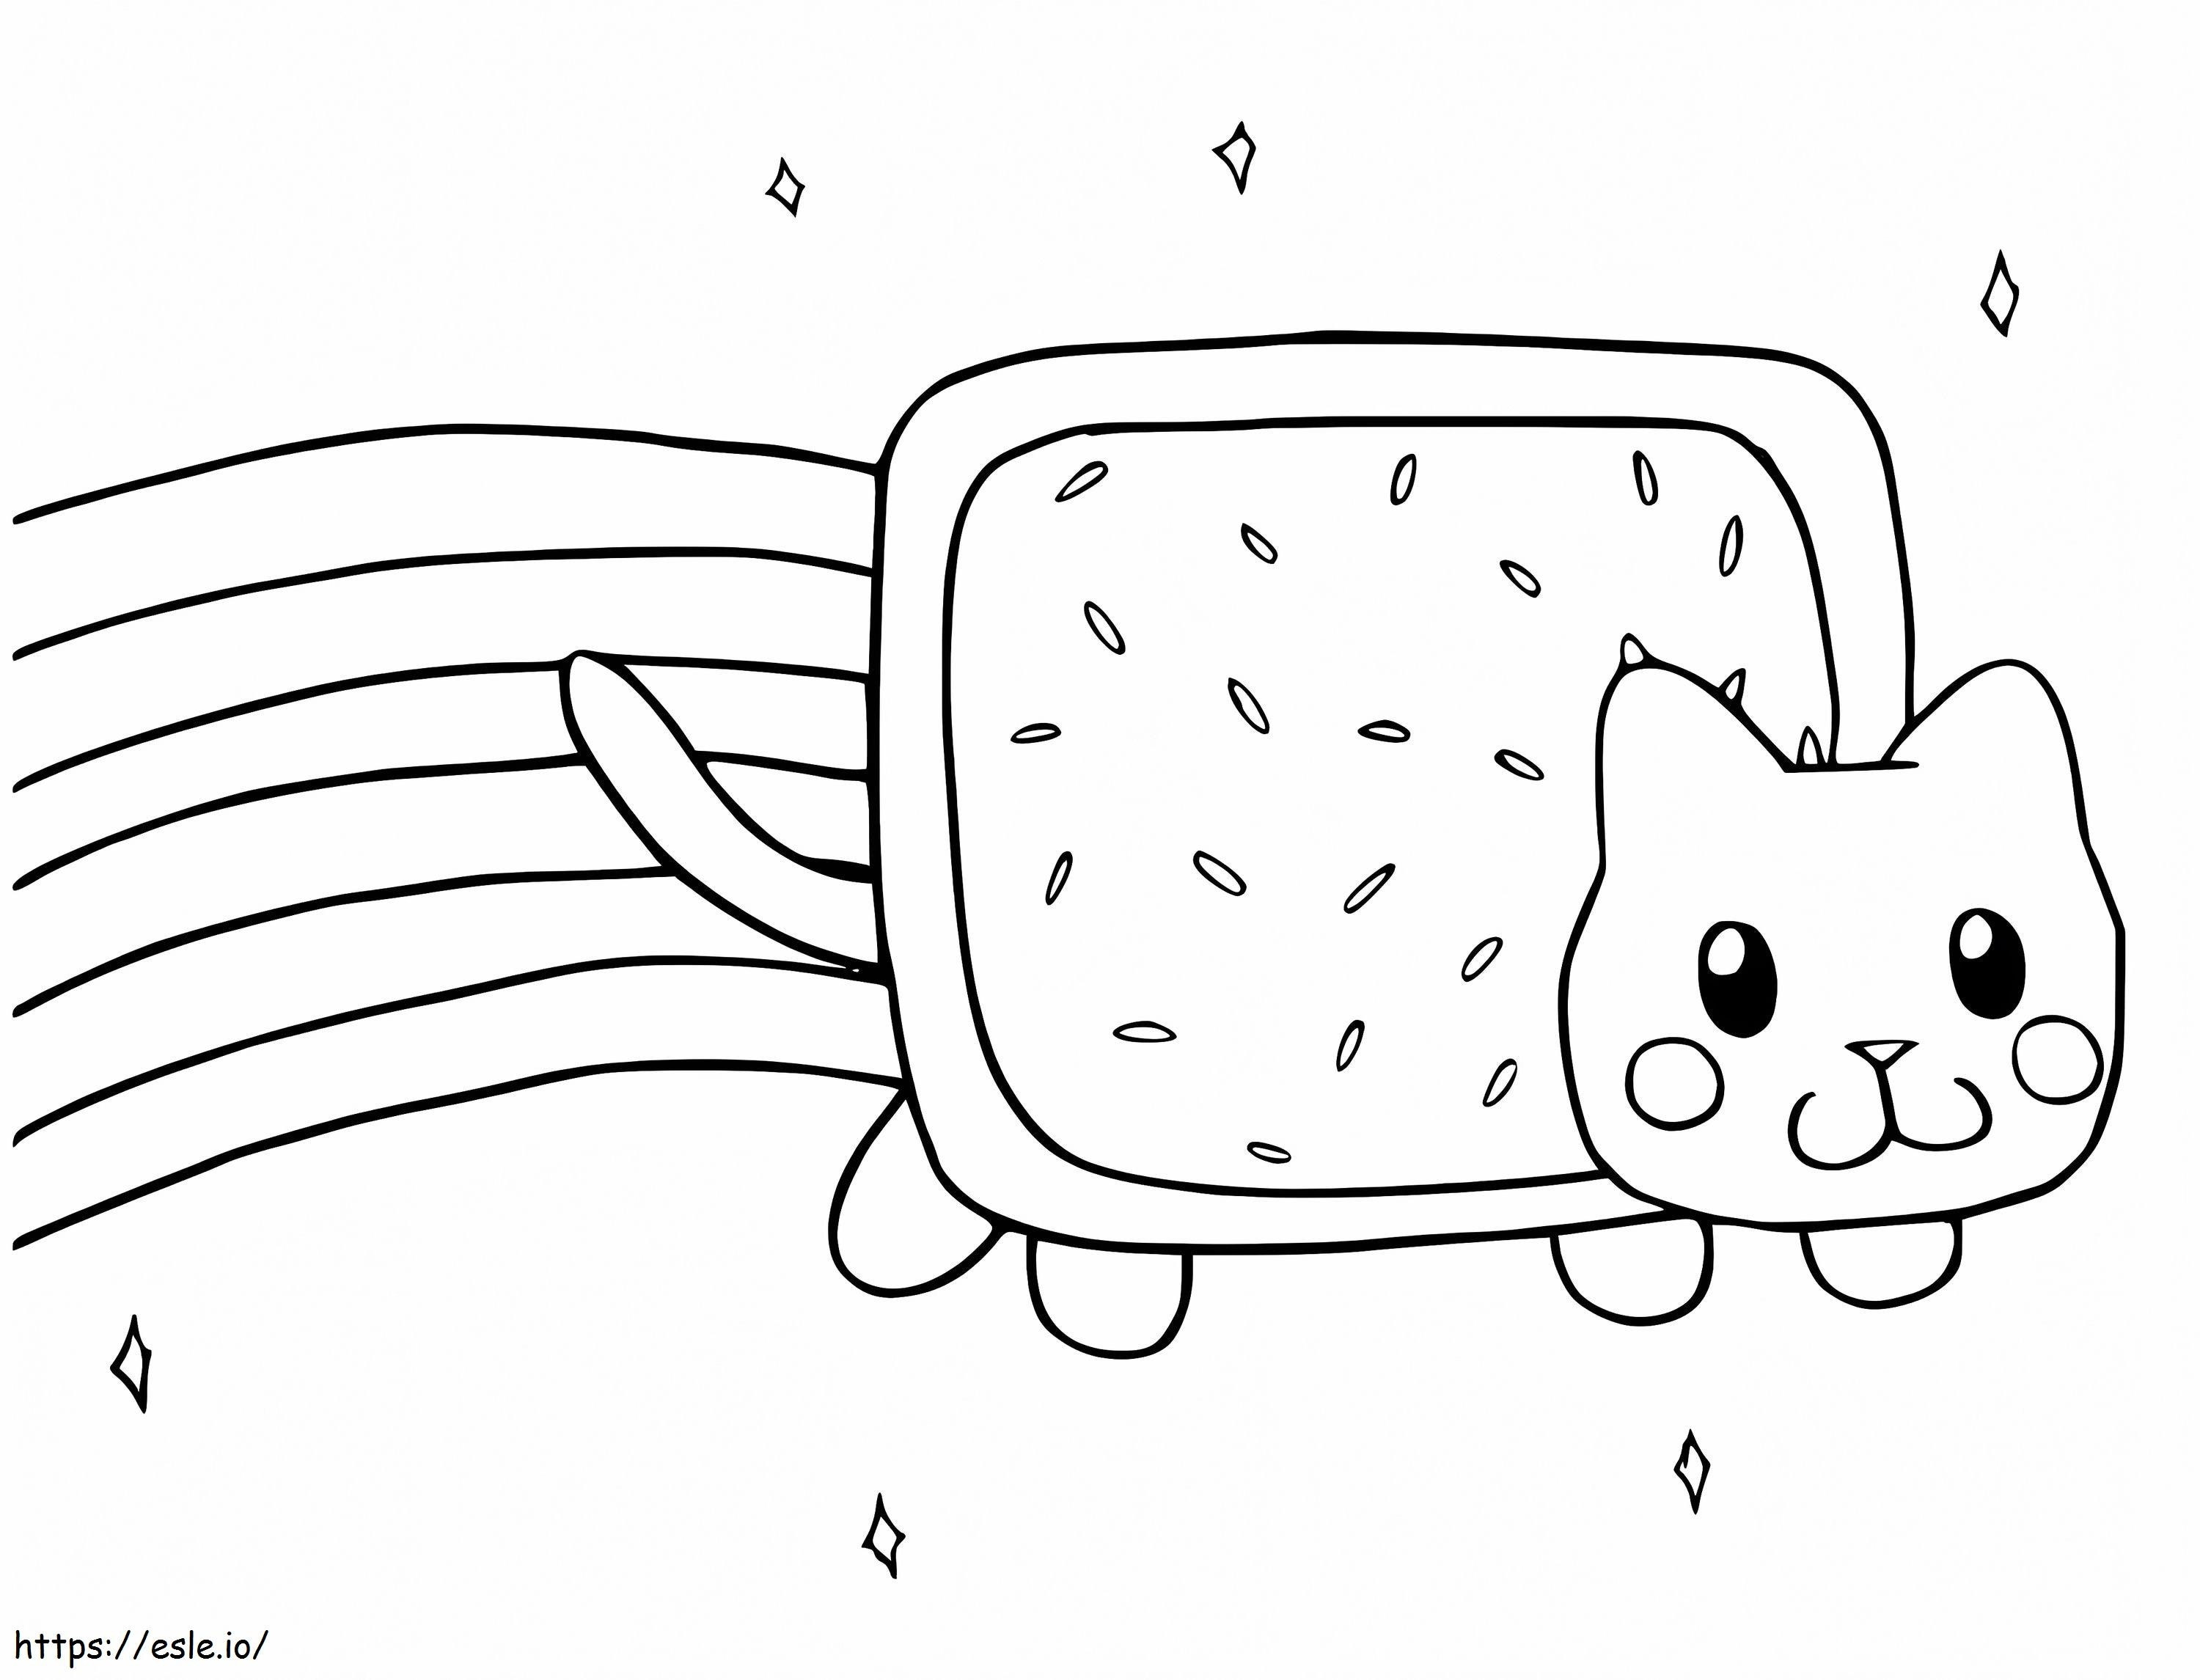 Kostenlose druckbare Nyan-Katze ausmalbilder